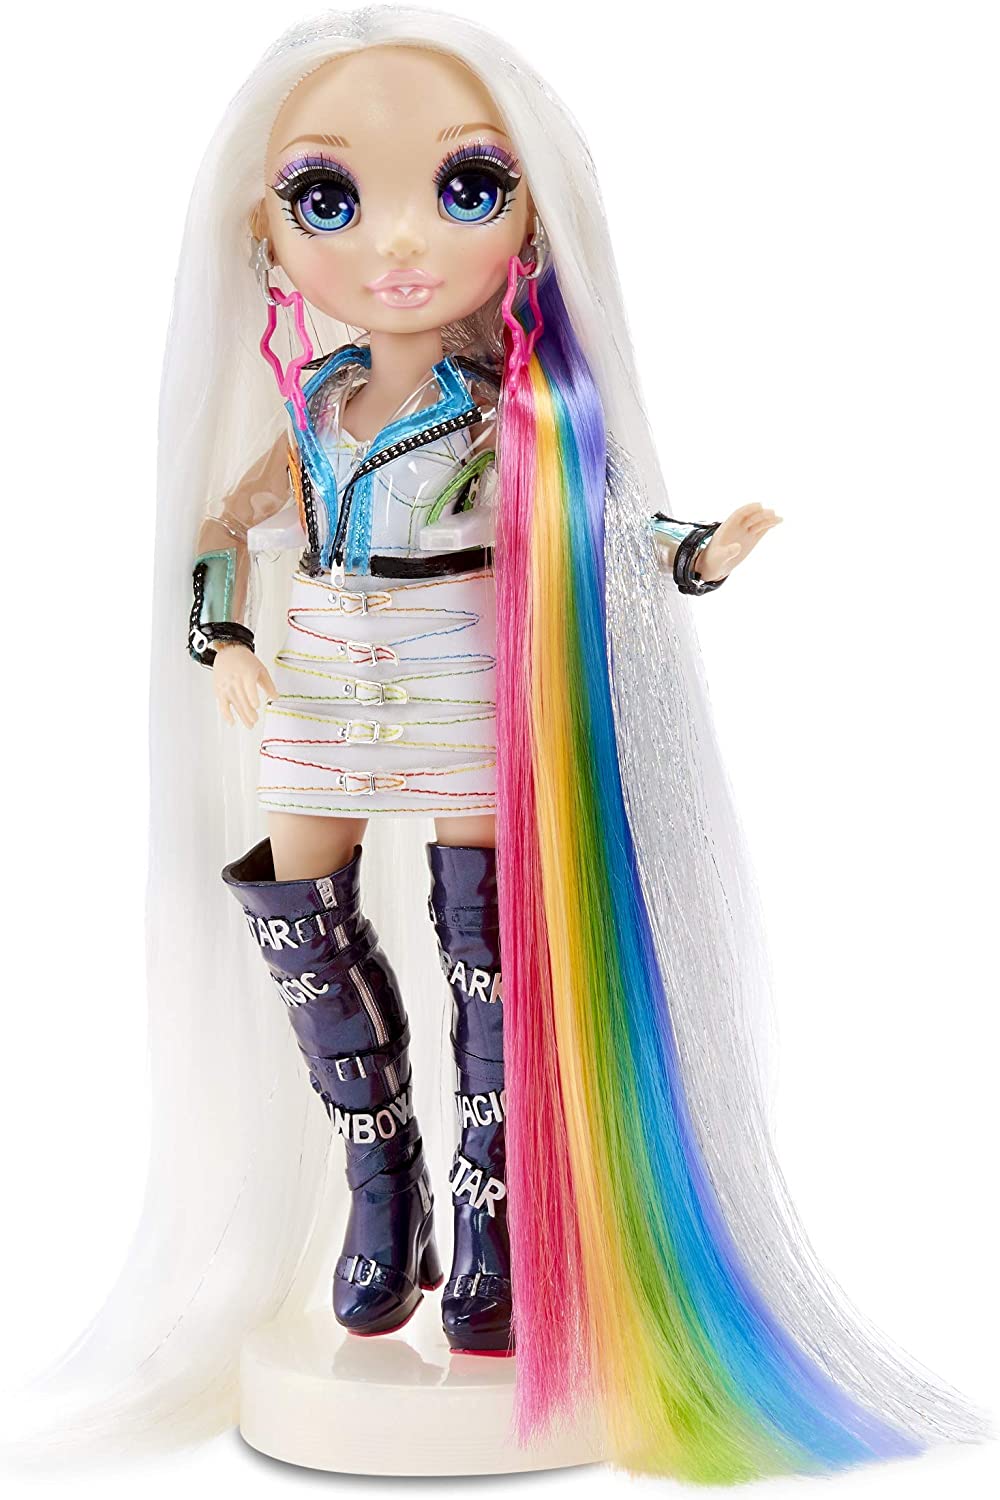 Rainbow High Hair Studio with exclusive Amaya Raine doll